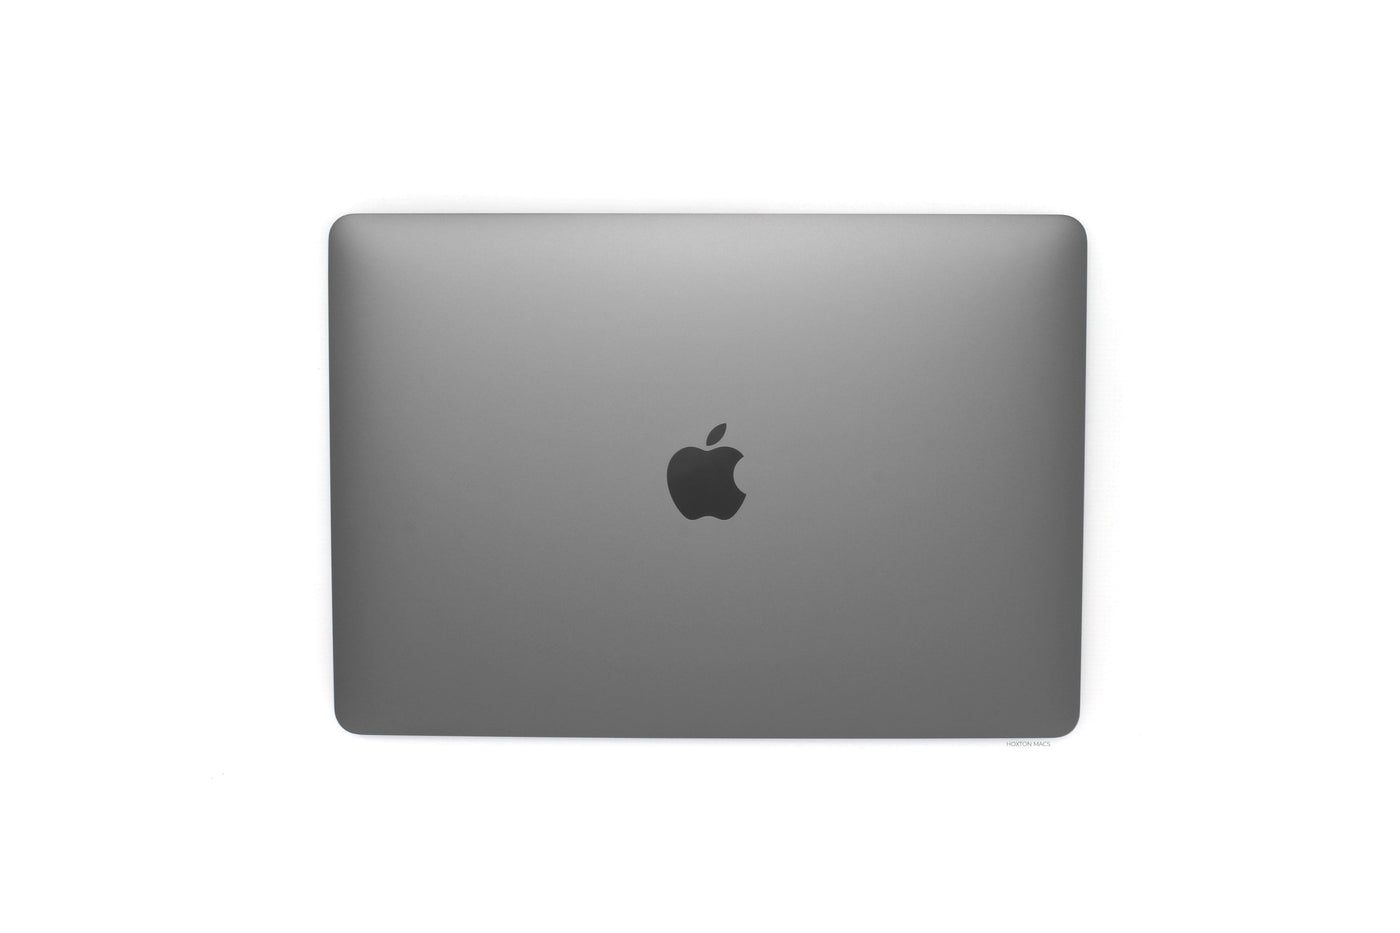 Apple MacBook Pro 13-inch MacBook Pro 13-inch Core i5 2.4GHz (Space Grey, 2019) - Fair